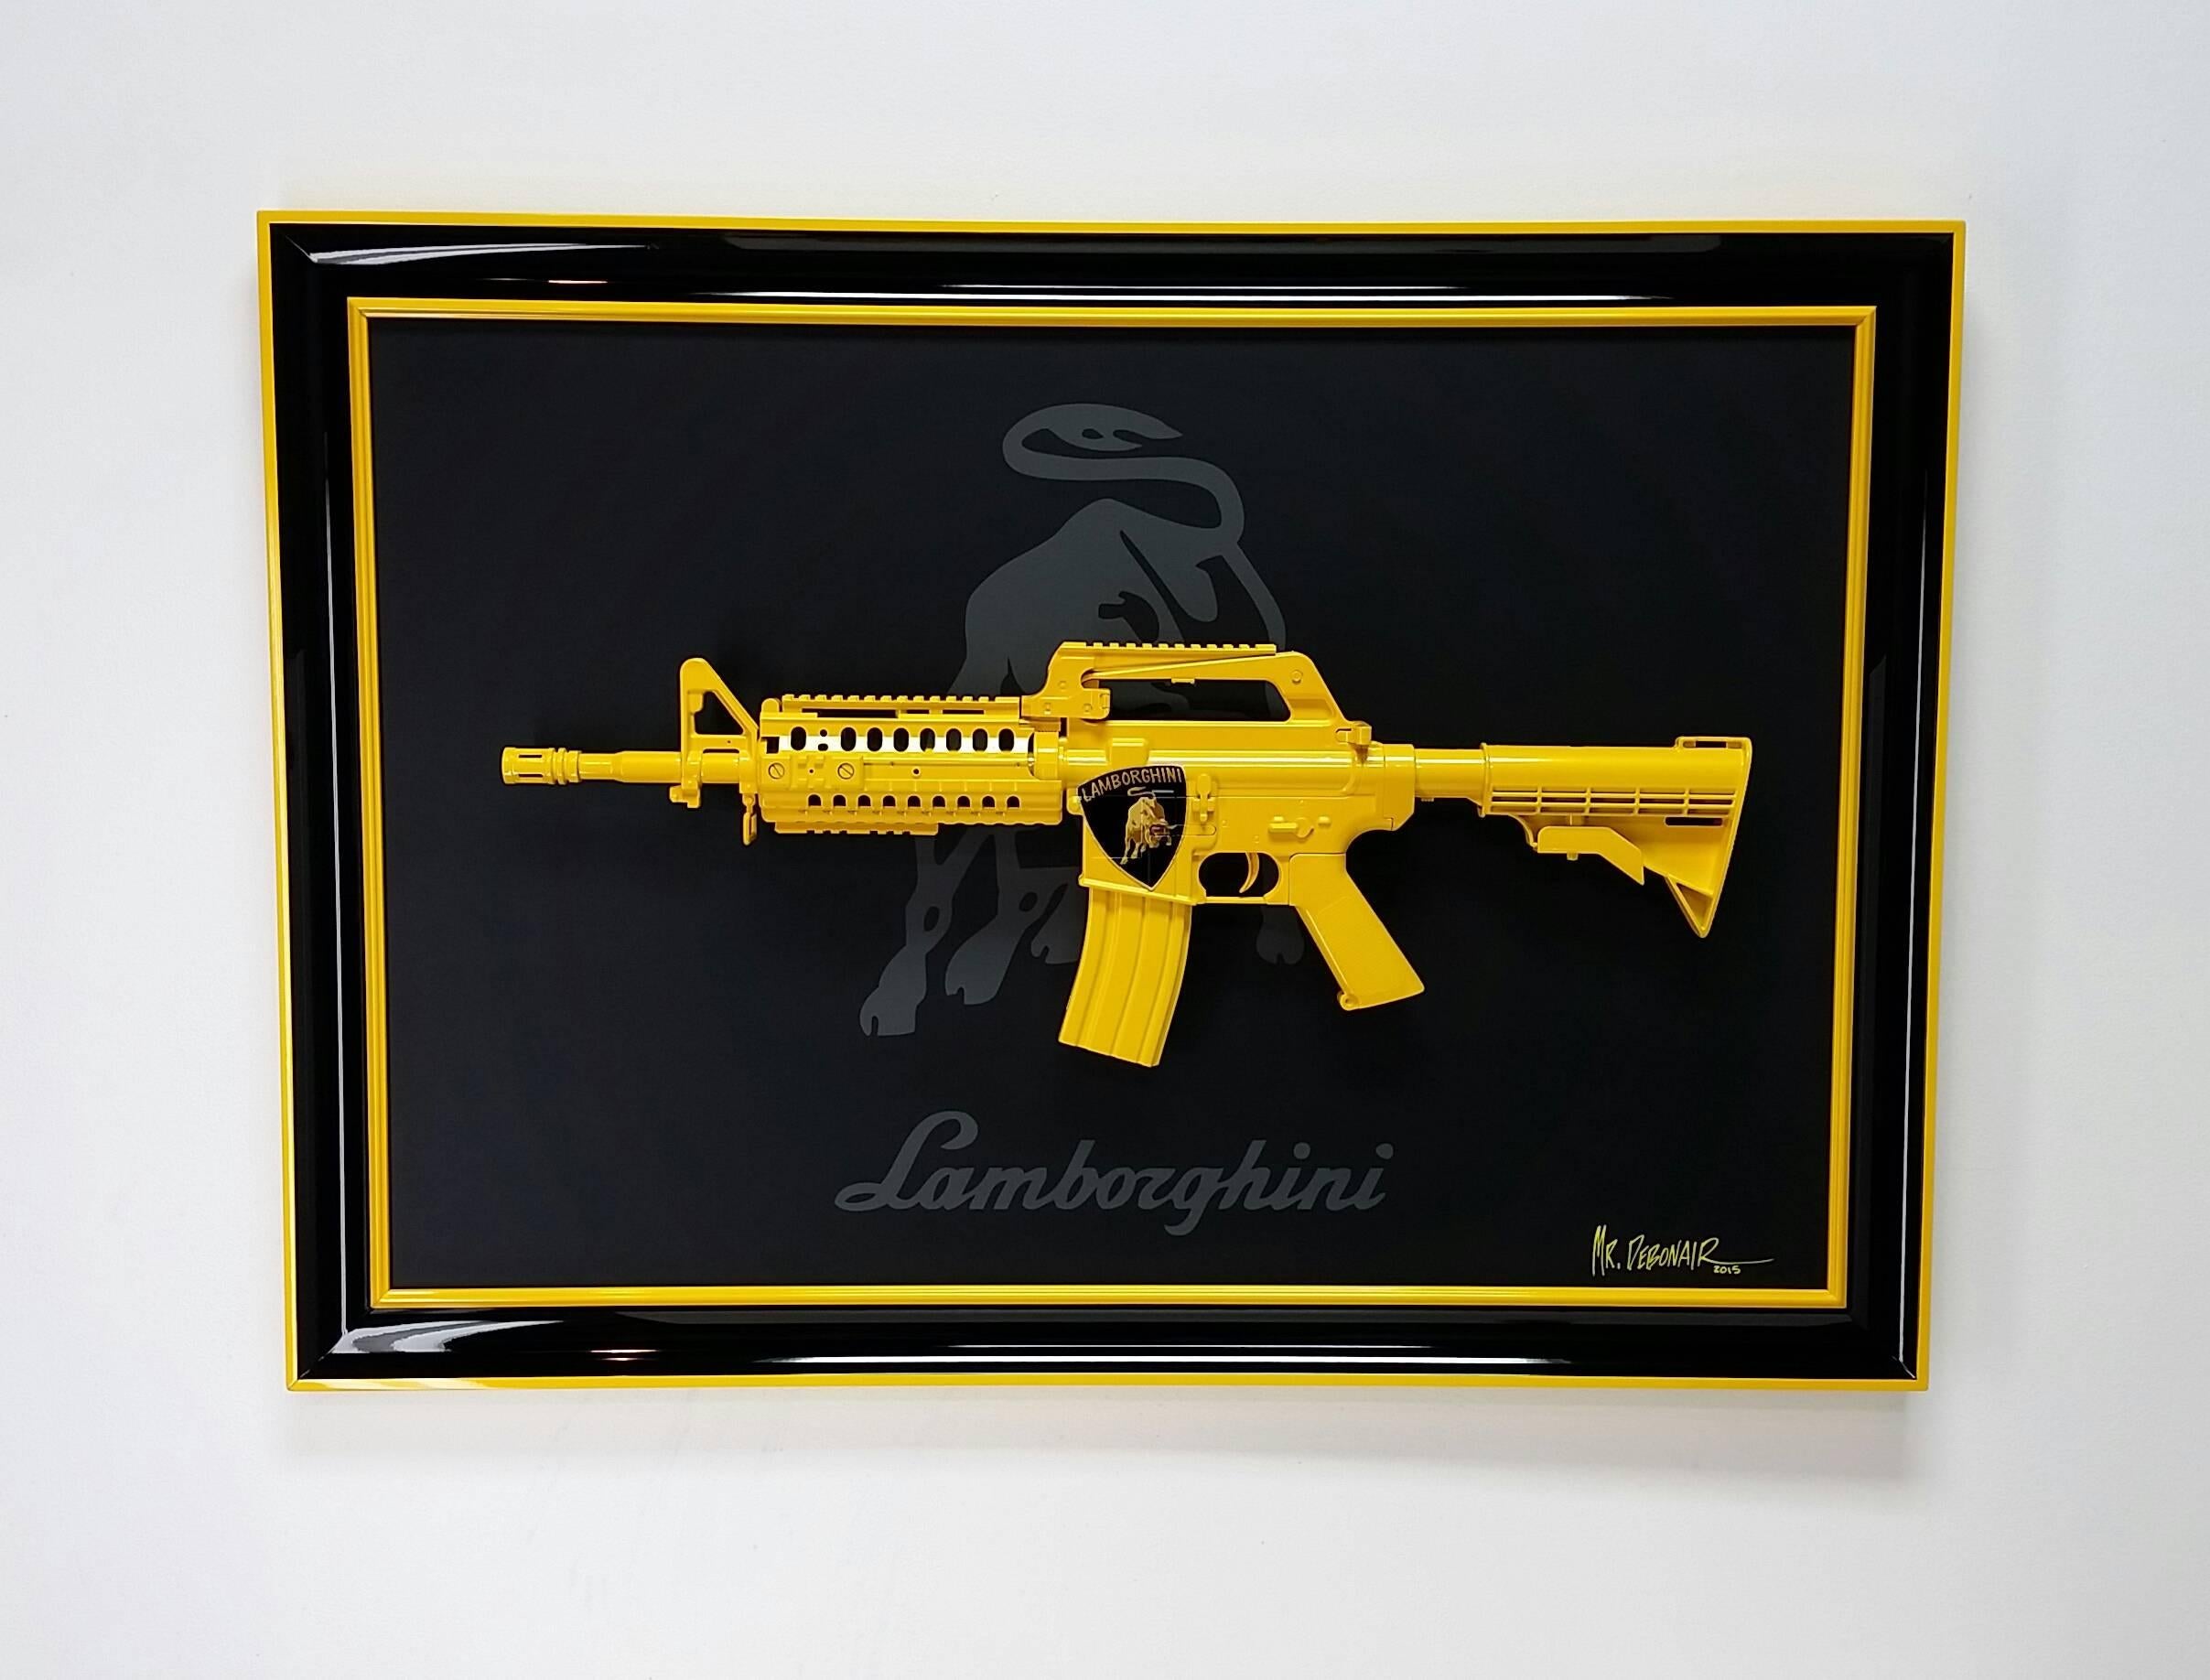 Lamborghini Gun - Painting by Mr Debonair